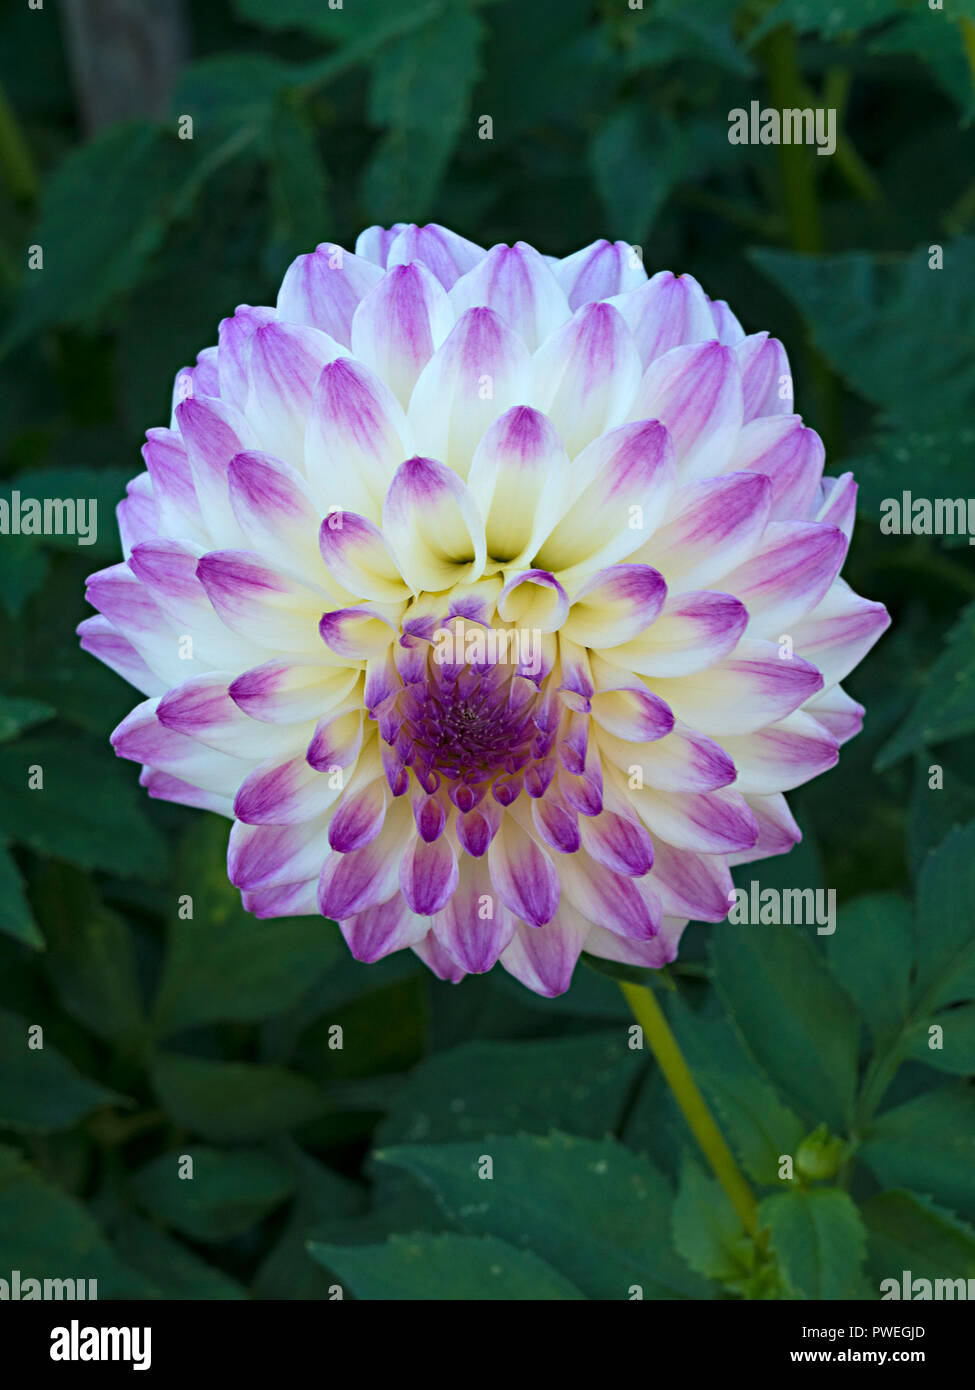 Closeup of single white and purple 'Formby Art' Dahlia flower, England, UK Stock Photo